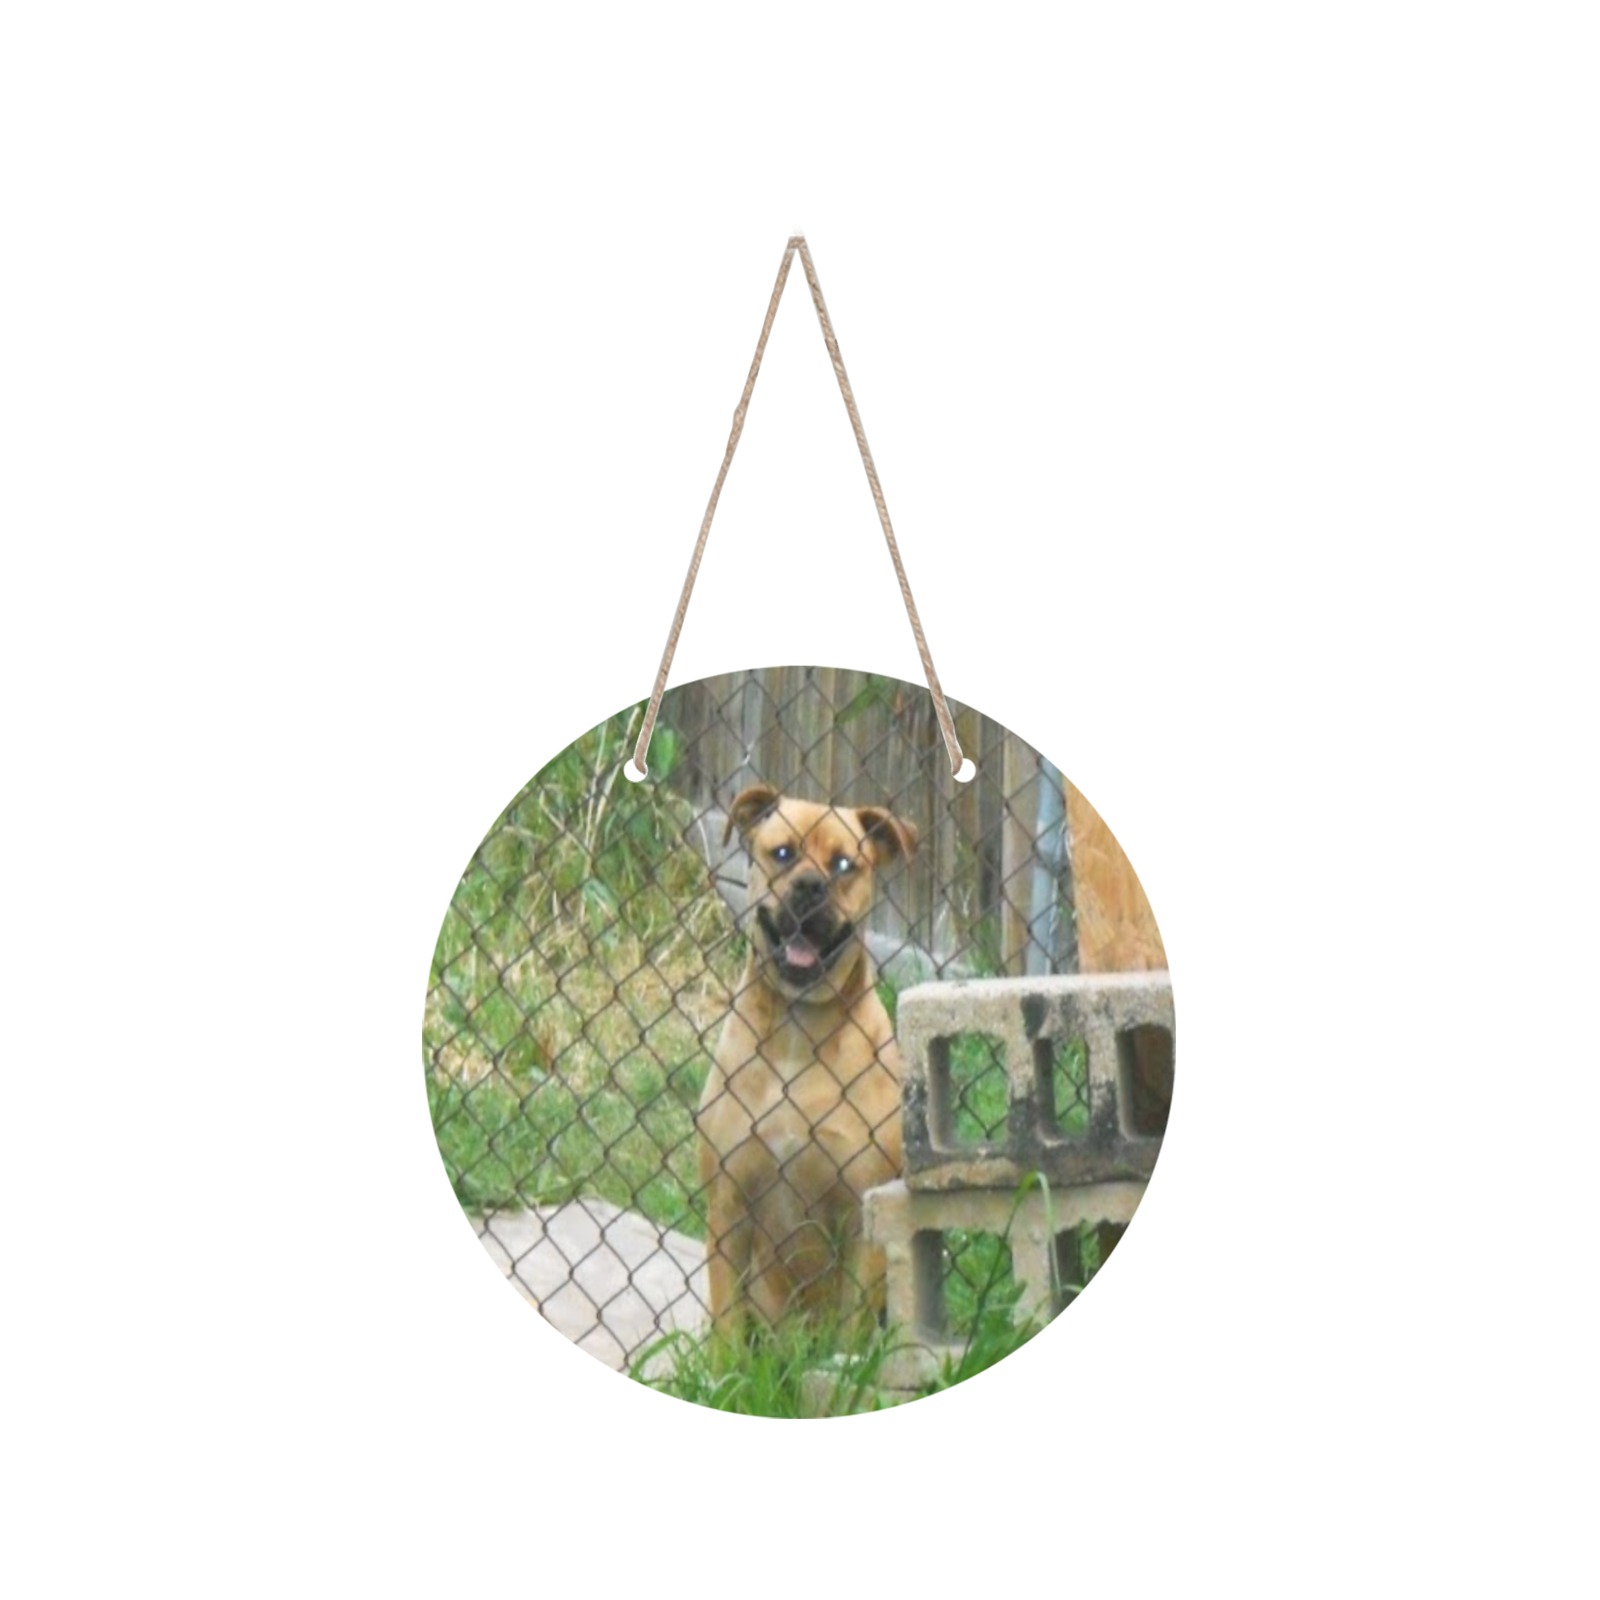 A Smiling Dog Round Wood Door Hanging Sign